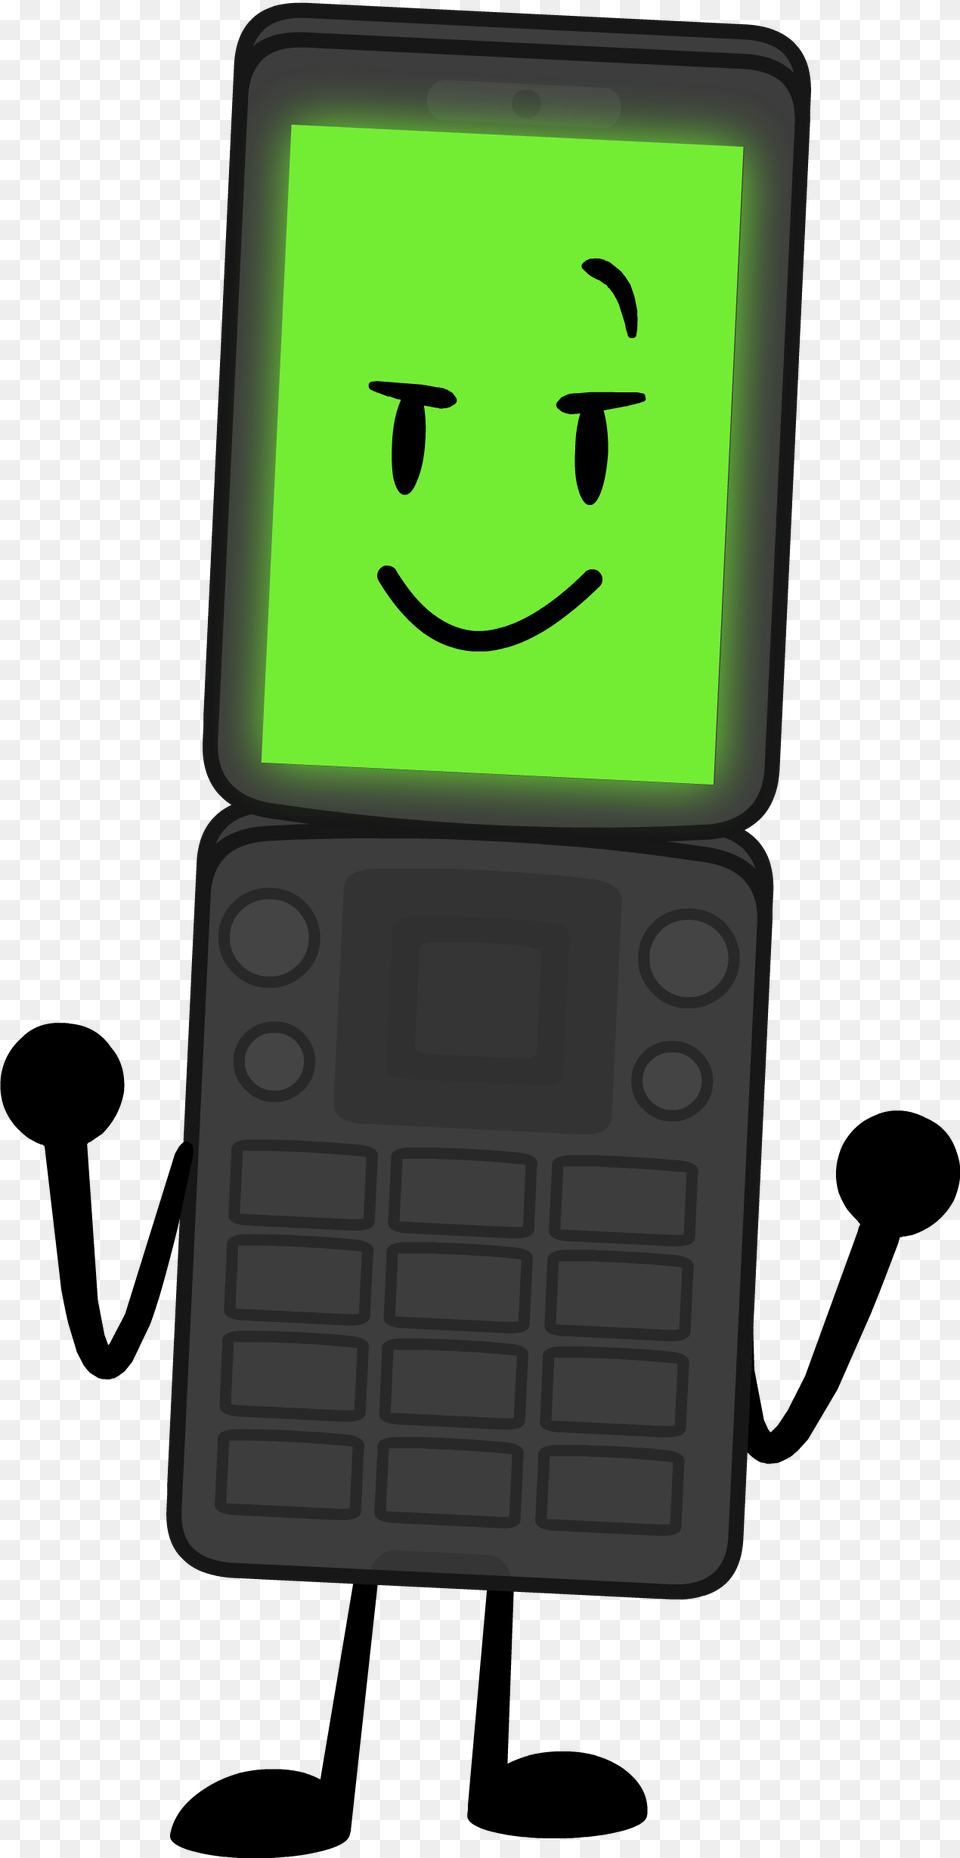 The Bfc Wiki Cartoon, Electronics, Mobile Phone, Phone, Computer Free Transparent Png